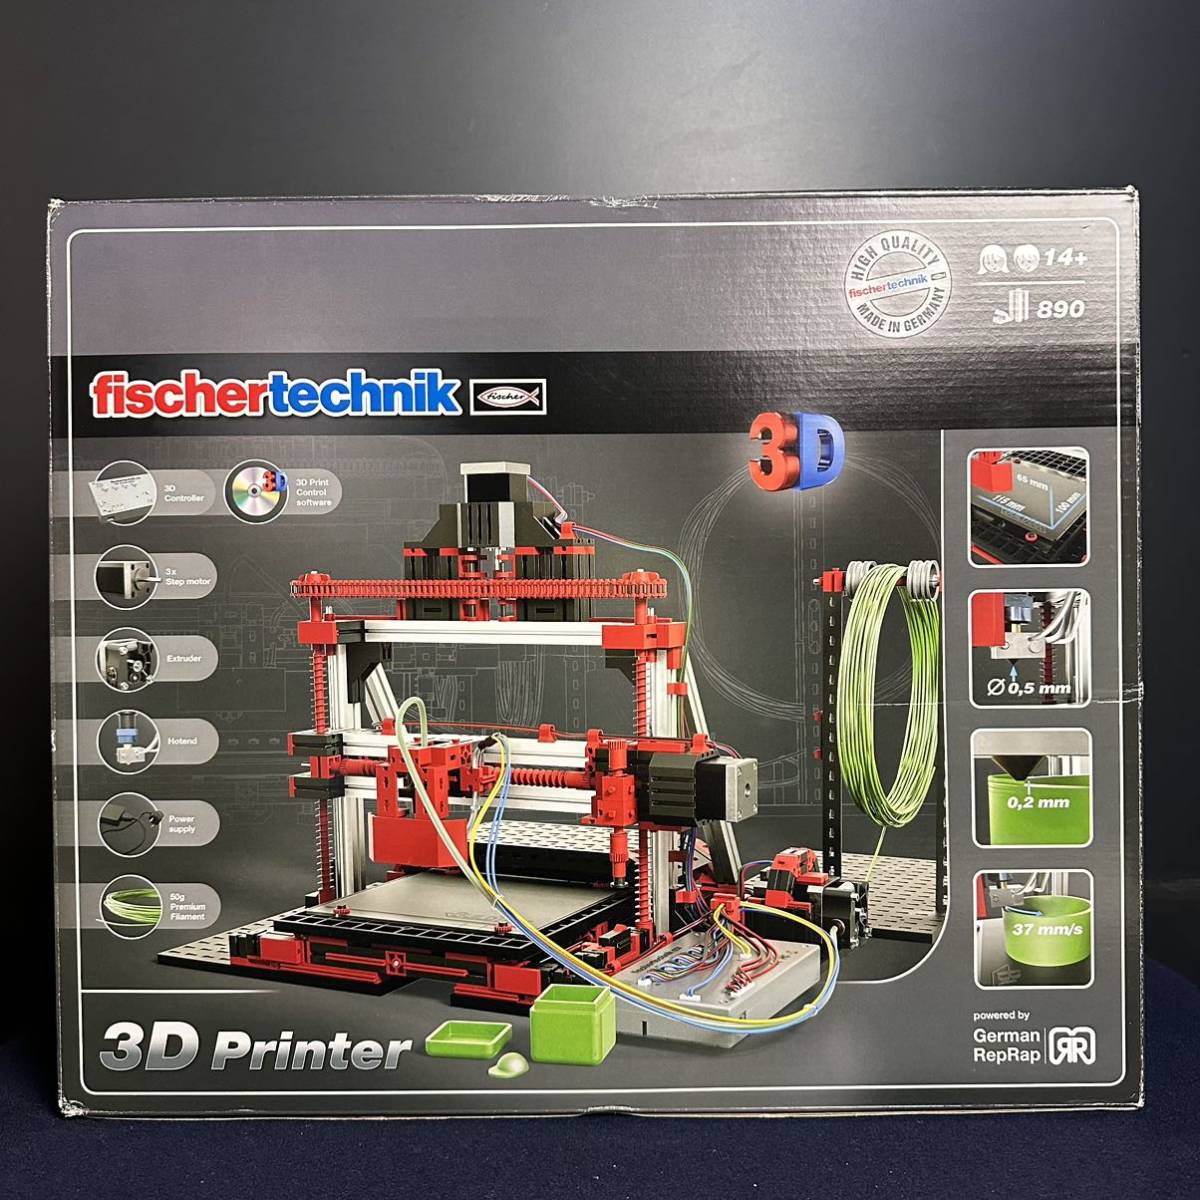 [SX328] fischertechnik フィッシャーテクニック 3D Printer ドイツ製 組立式 試作品制作 電子工作 知育玩具 新品未開封の画像1